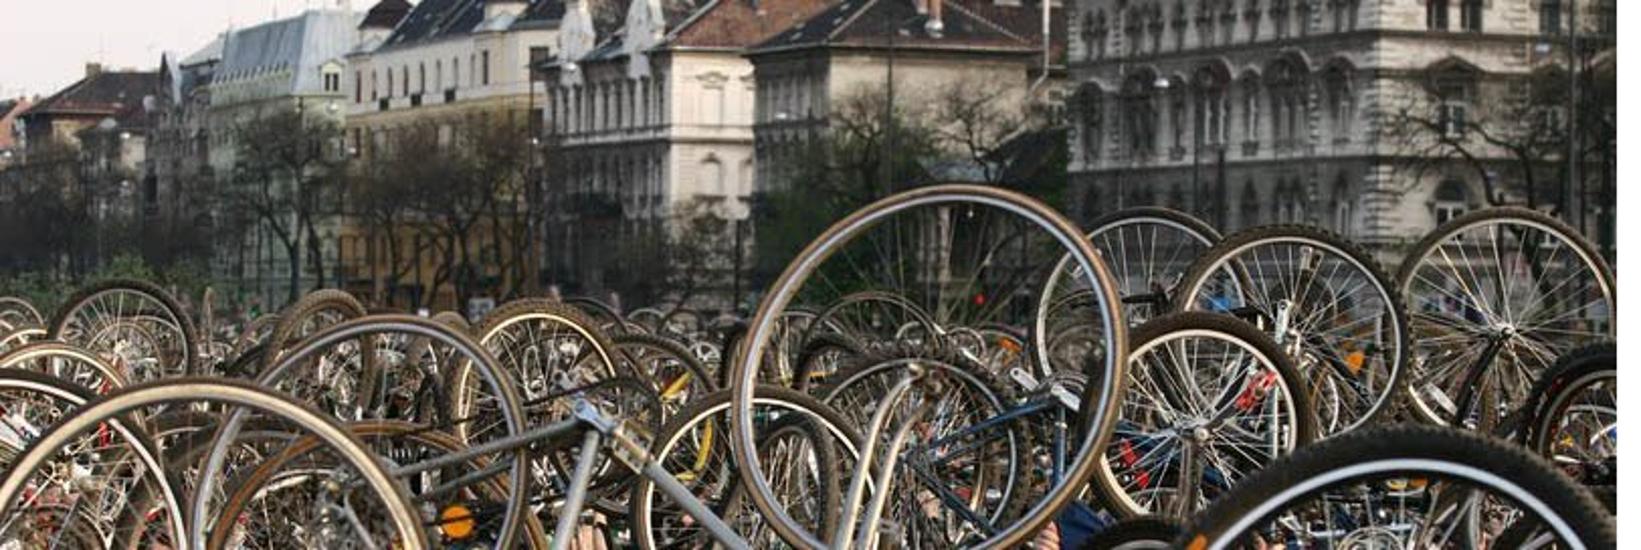 Hungarian Critical Mass Cyclists Back With New Name 'I Bike Budapest'